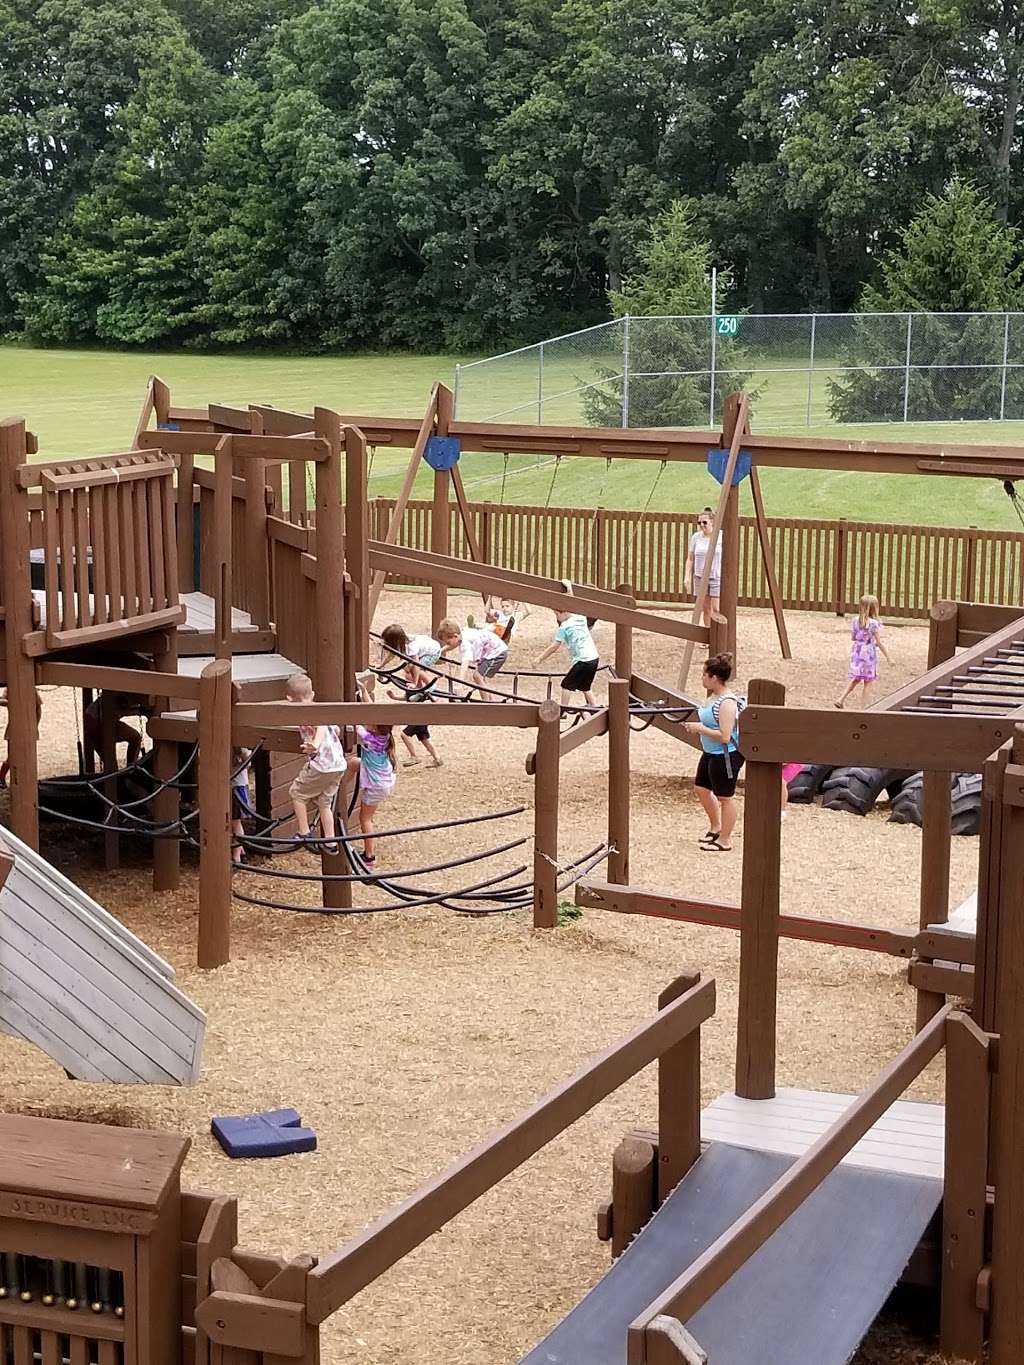 Kids Kingdom Playground | Photo 4 of 10 | Address: 4601 Grandview Rd, Hanover, PA 17331, USA | Phone: (717) 632-7366